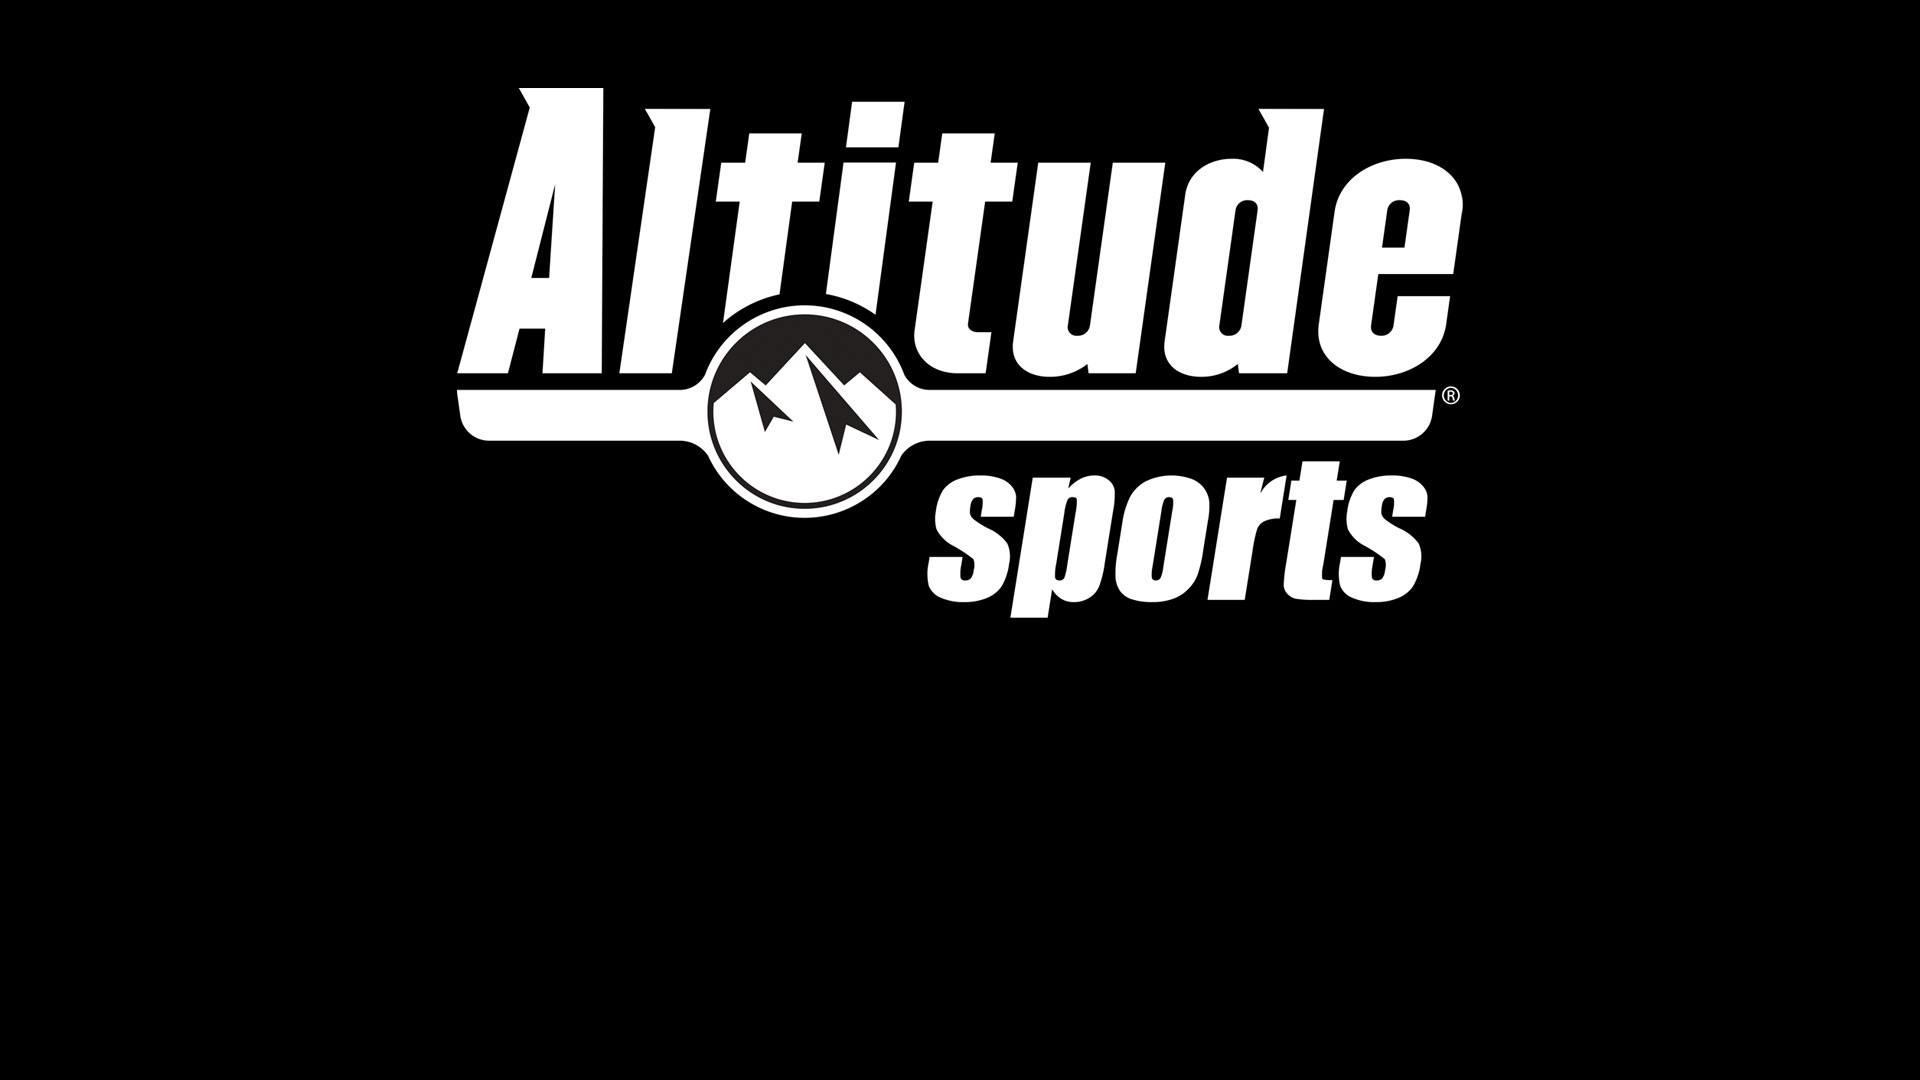 https://www.altitudesports.com/media/5666/altaports-logo-black2-1920x1080.jpg?anchor=center&mode=crop&width=1200&height=676&rnd=132416112500000000